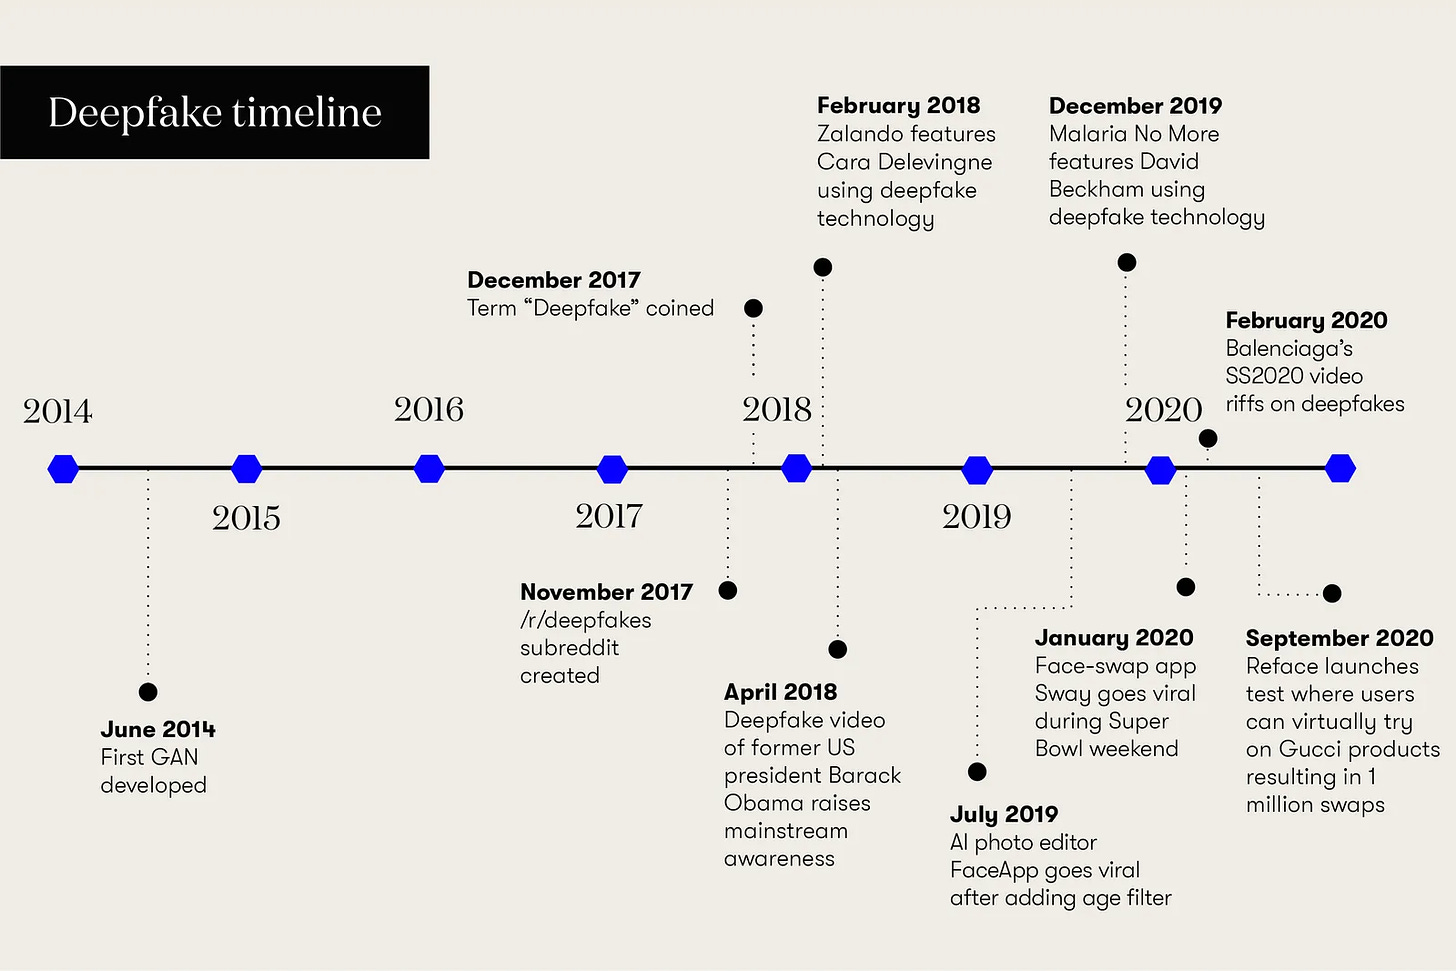 Later Timeline of Deepfakes Development